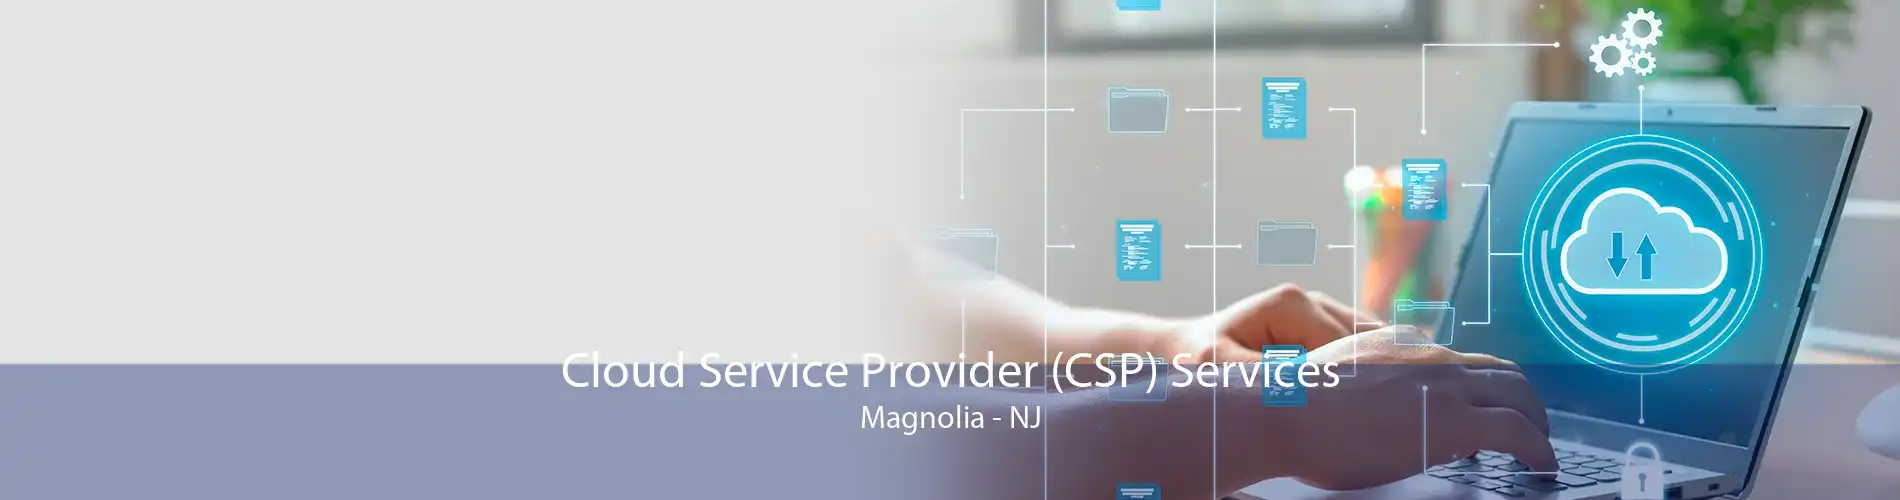 Cloud Service Provider (CSP) Services Magnolia - NJ